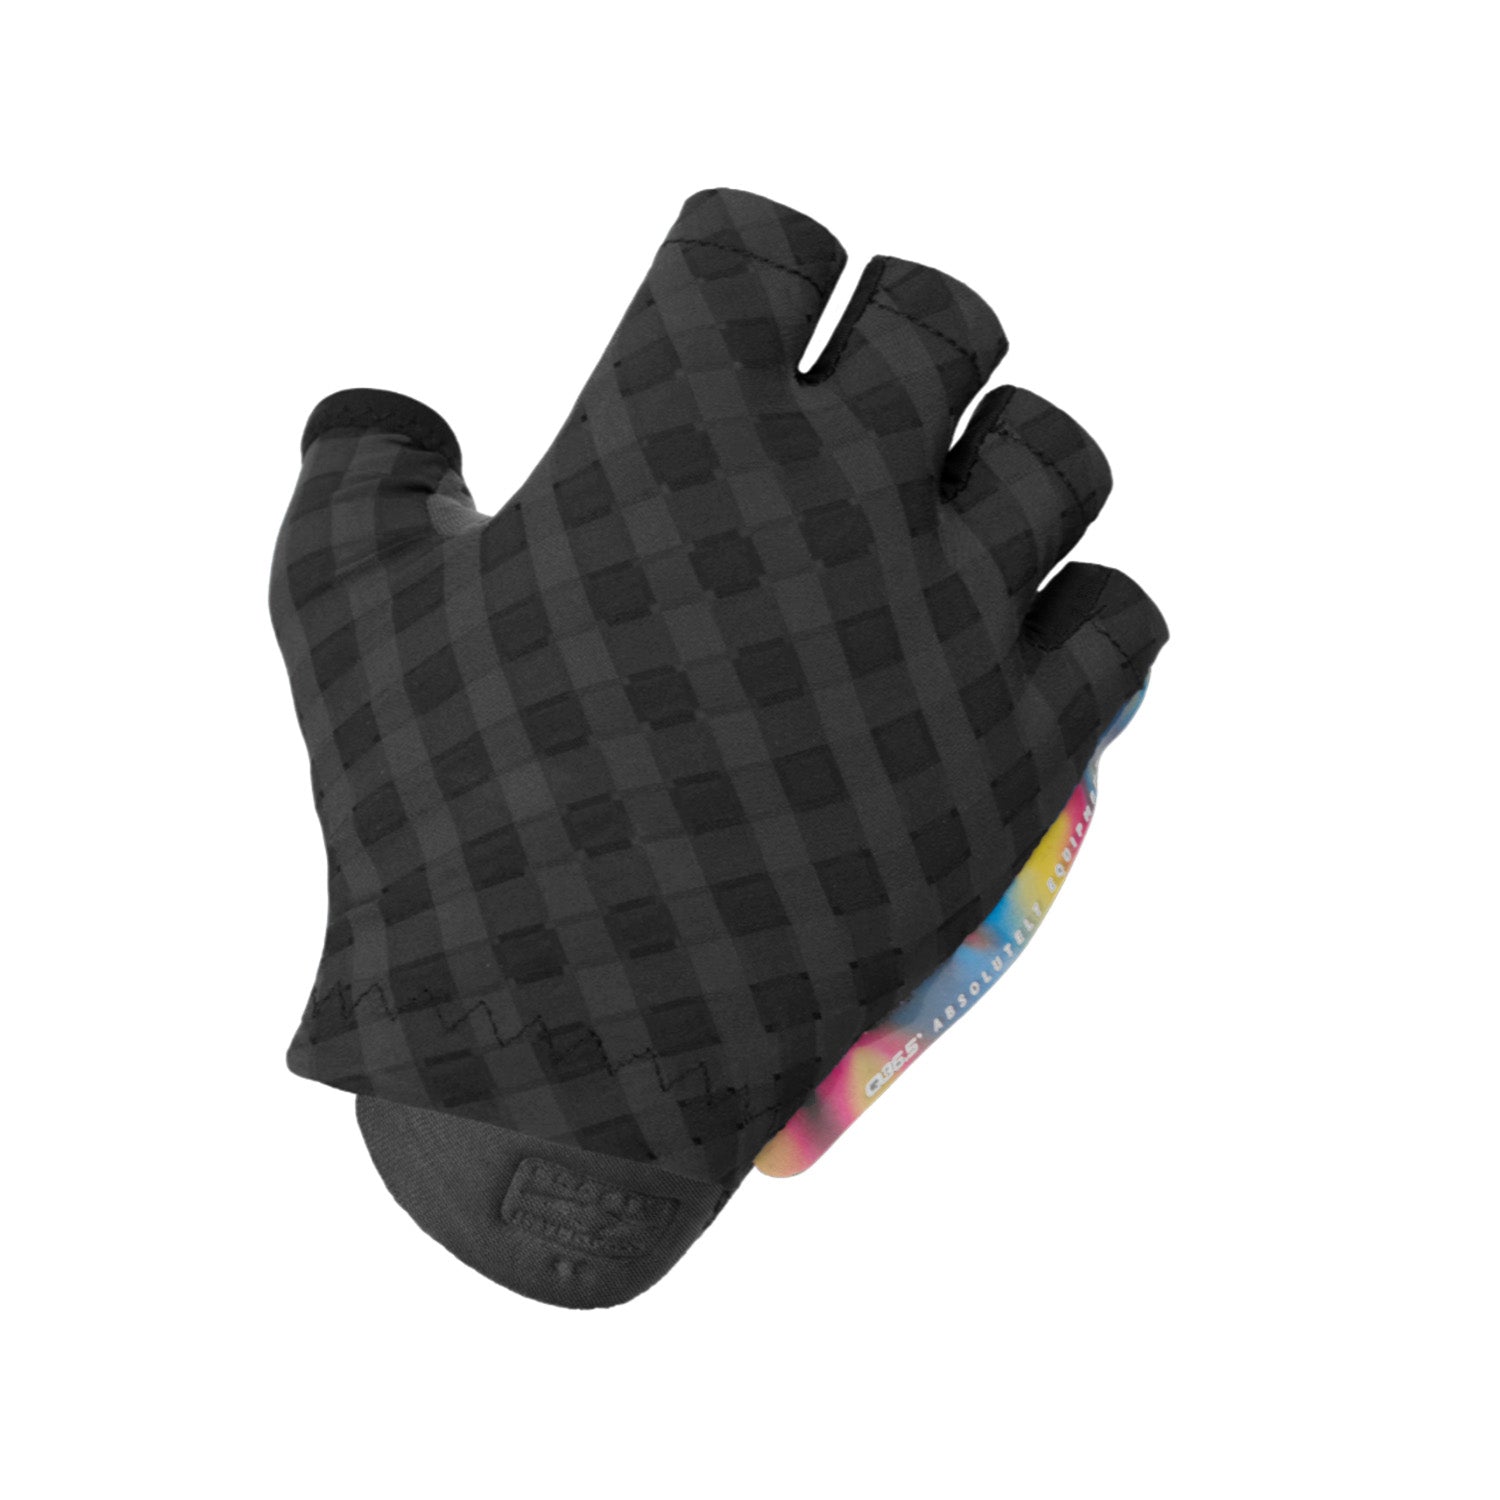 Q36.5 Dottore Clima Summer Gloves Black